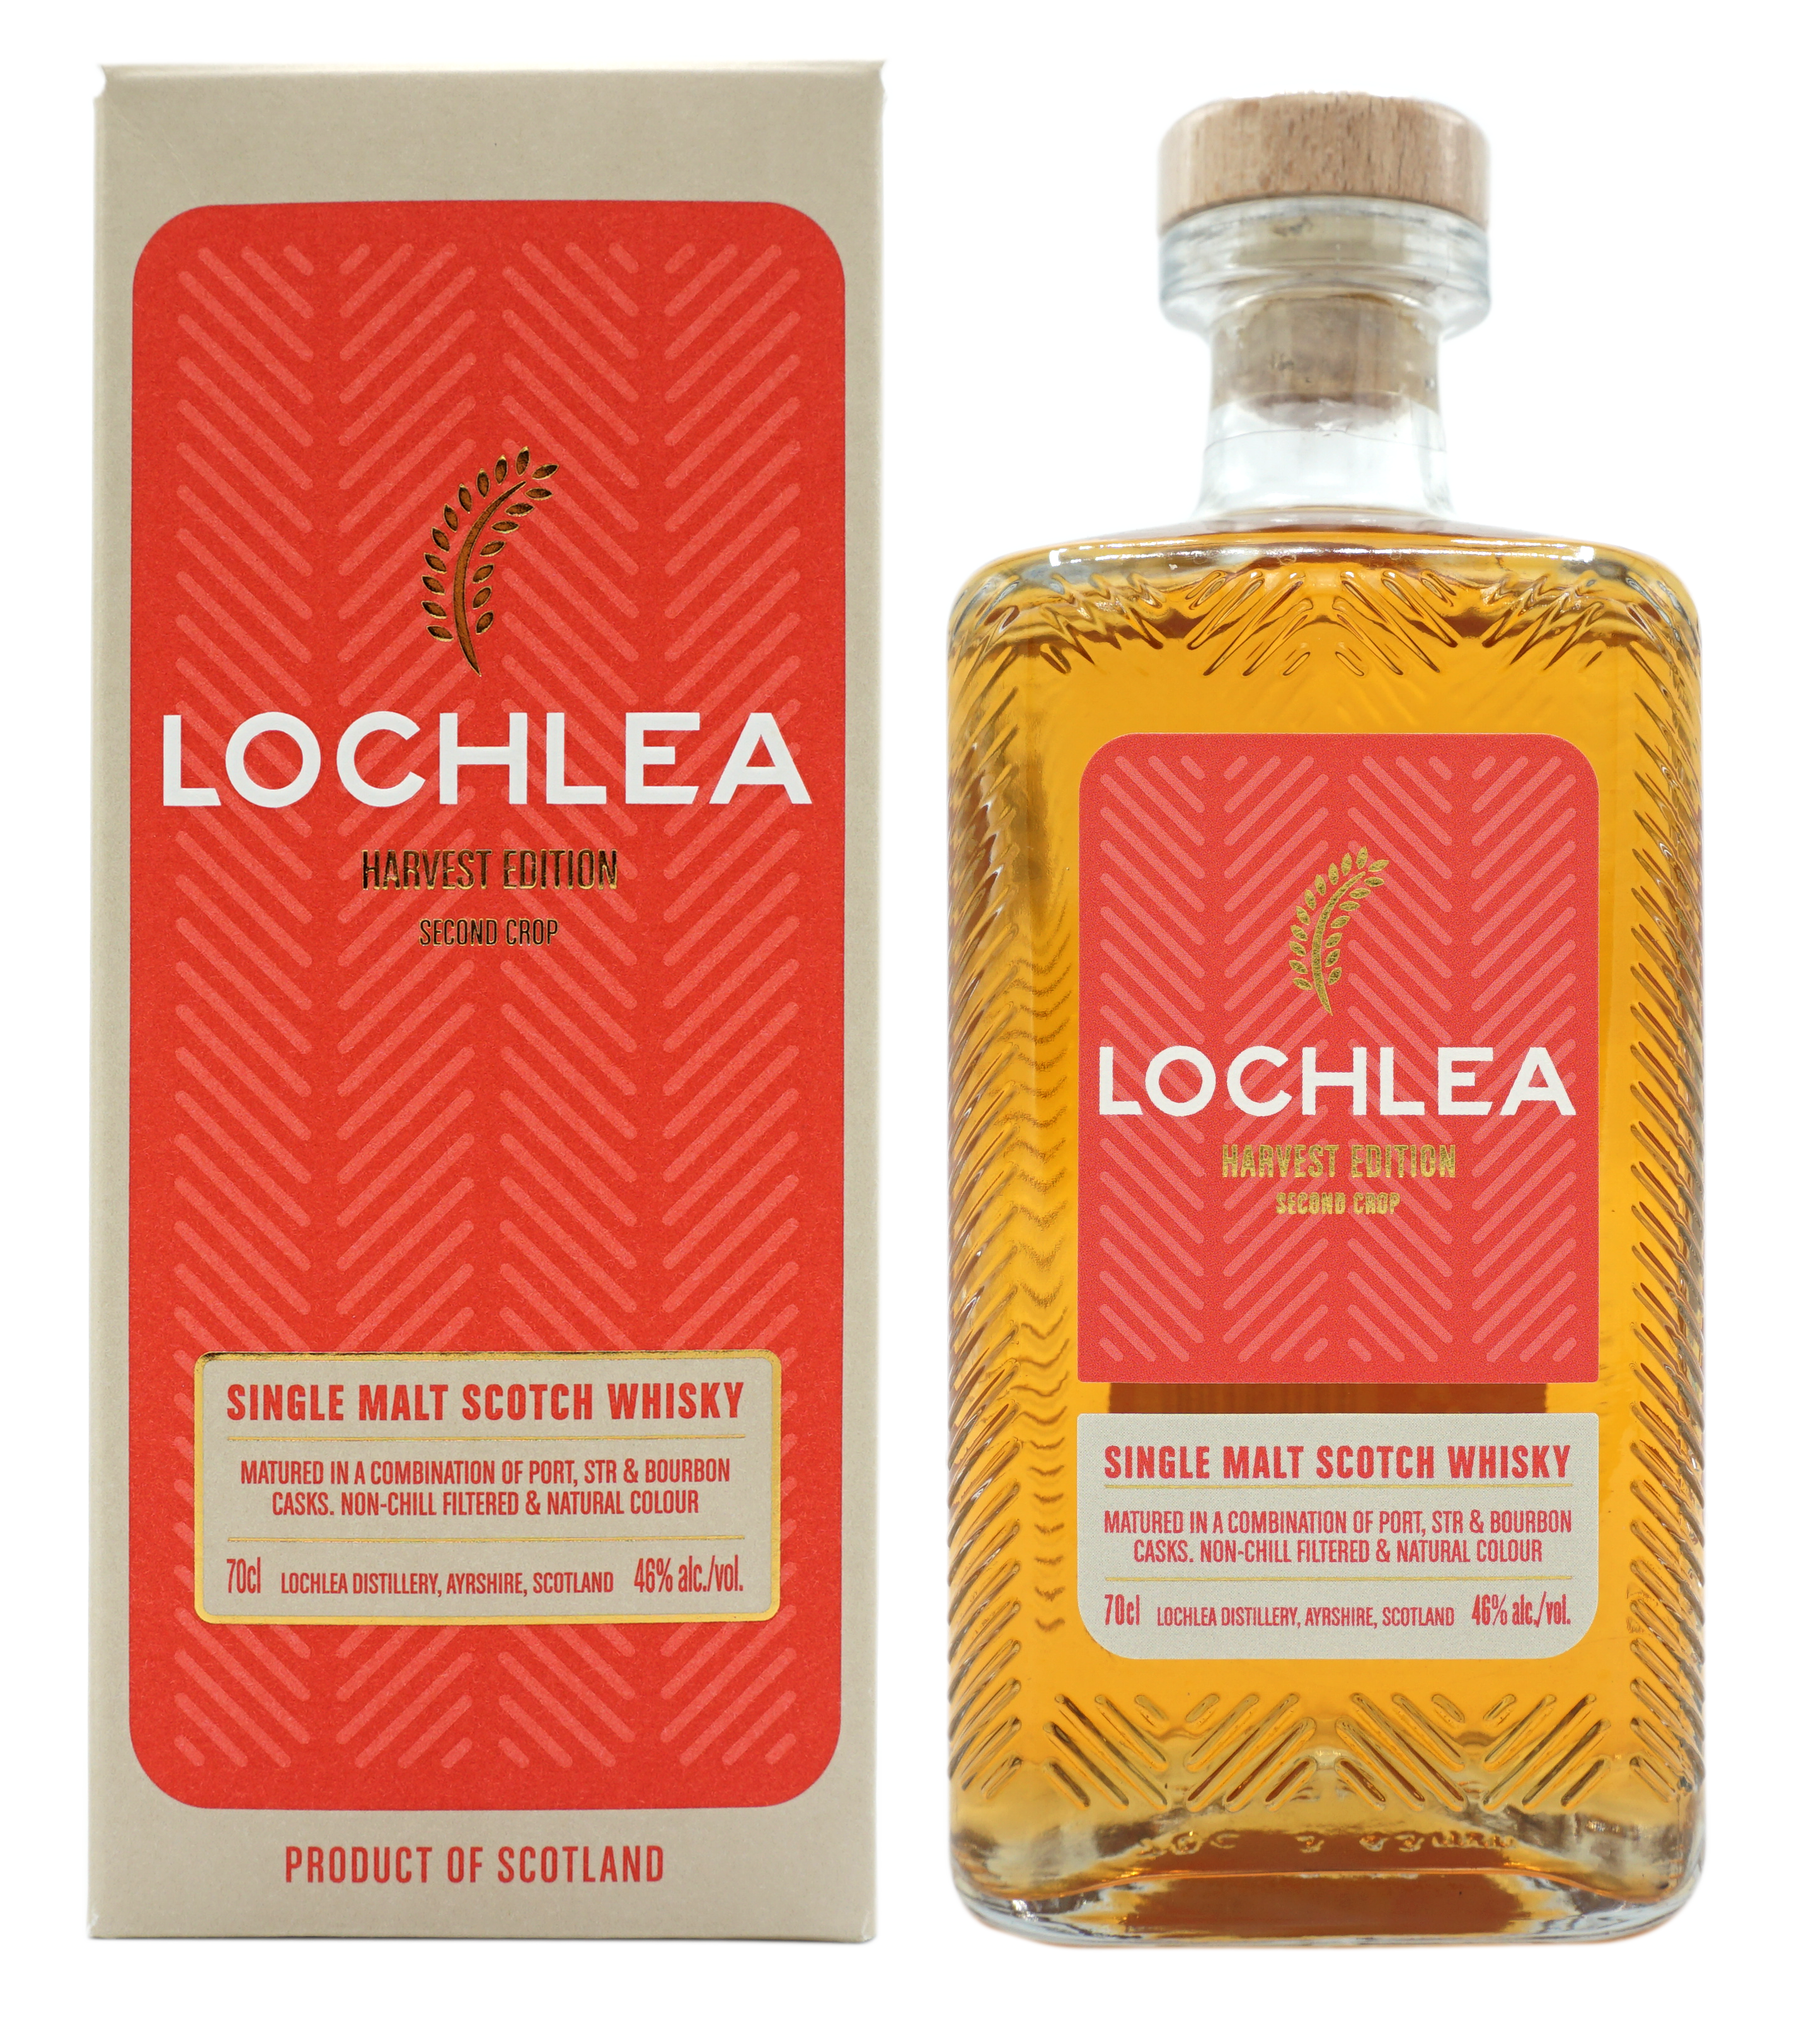 Lochlea HarvestEdition SecondCrop Port,Str&Bourbon 46% Compleet